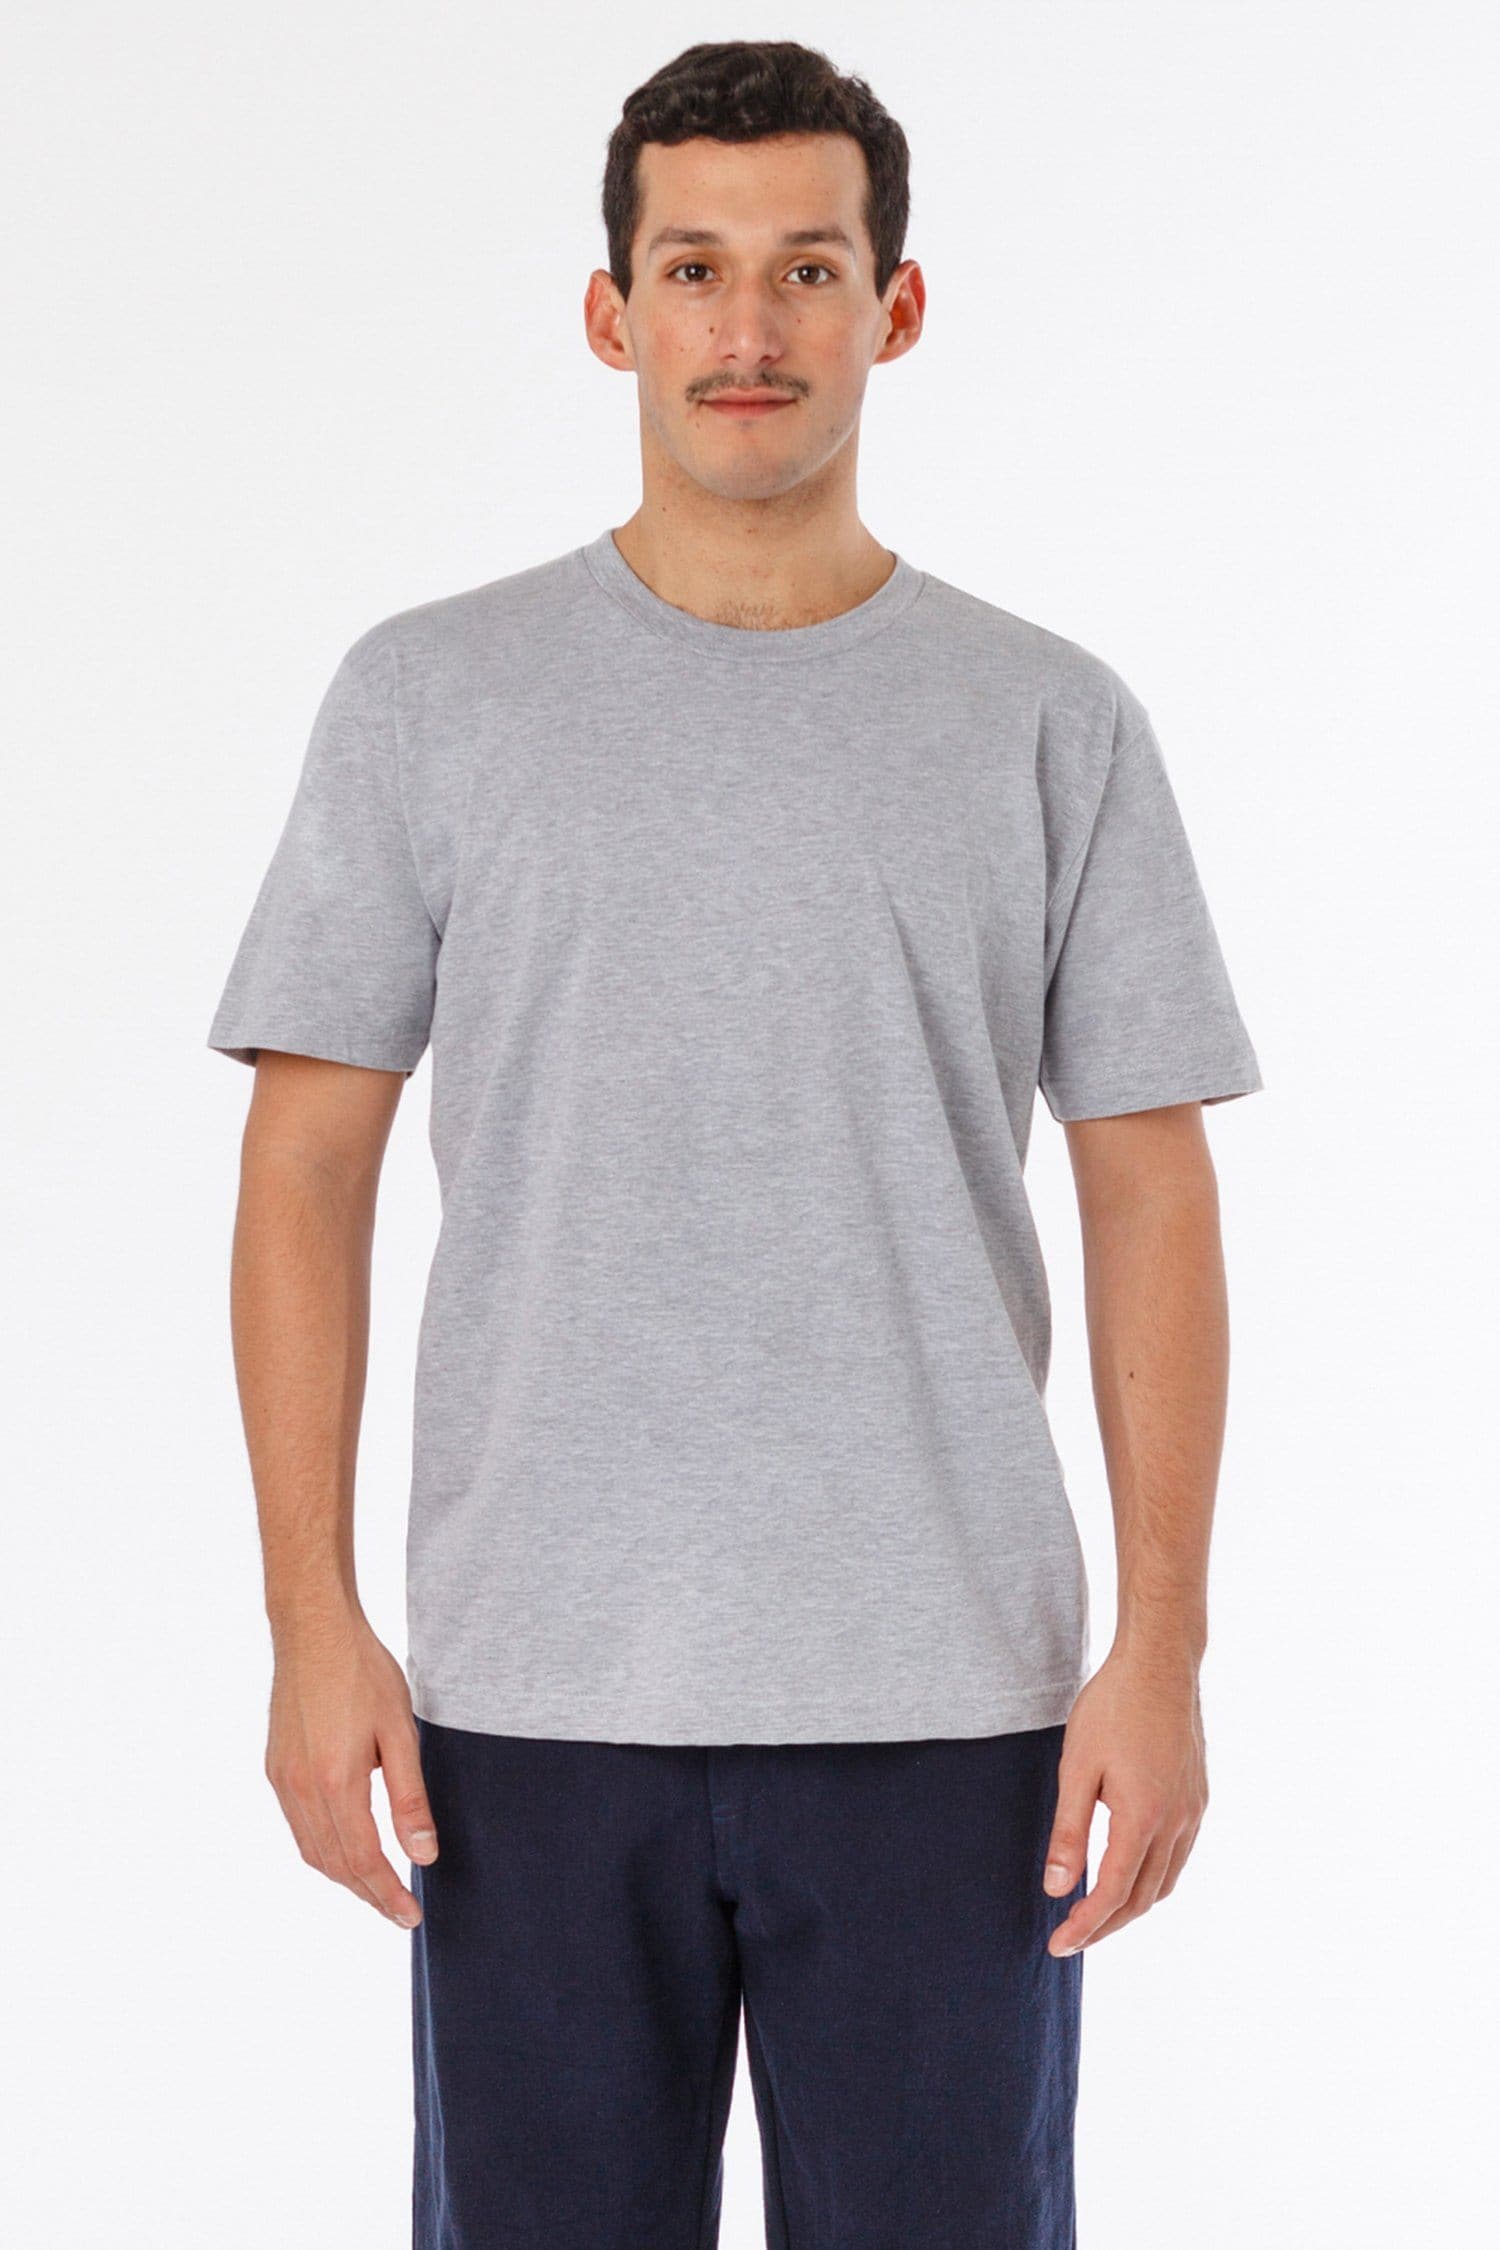 20001 - Fine Apparel – Neck T-Shirt Los Angeles Crew Jersey